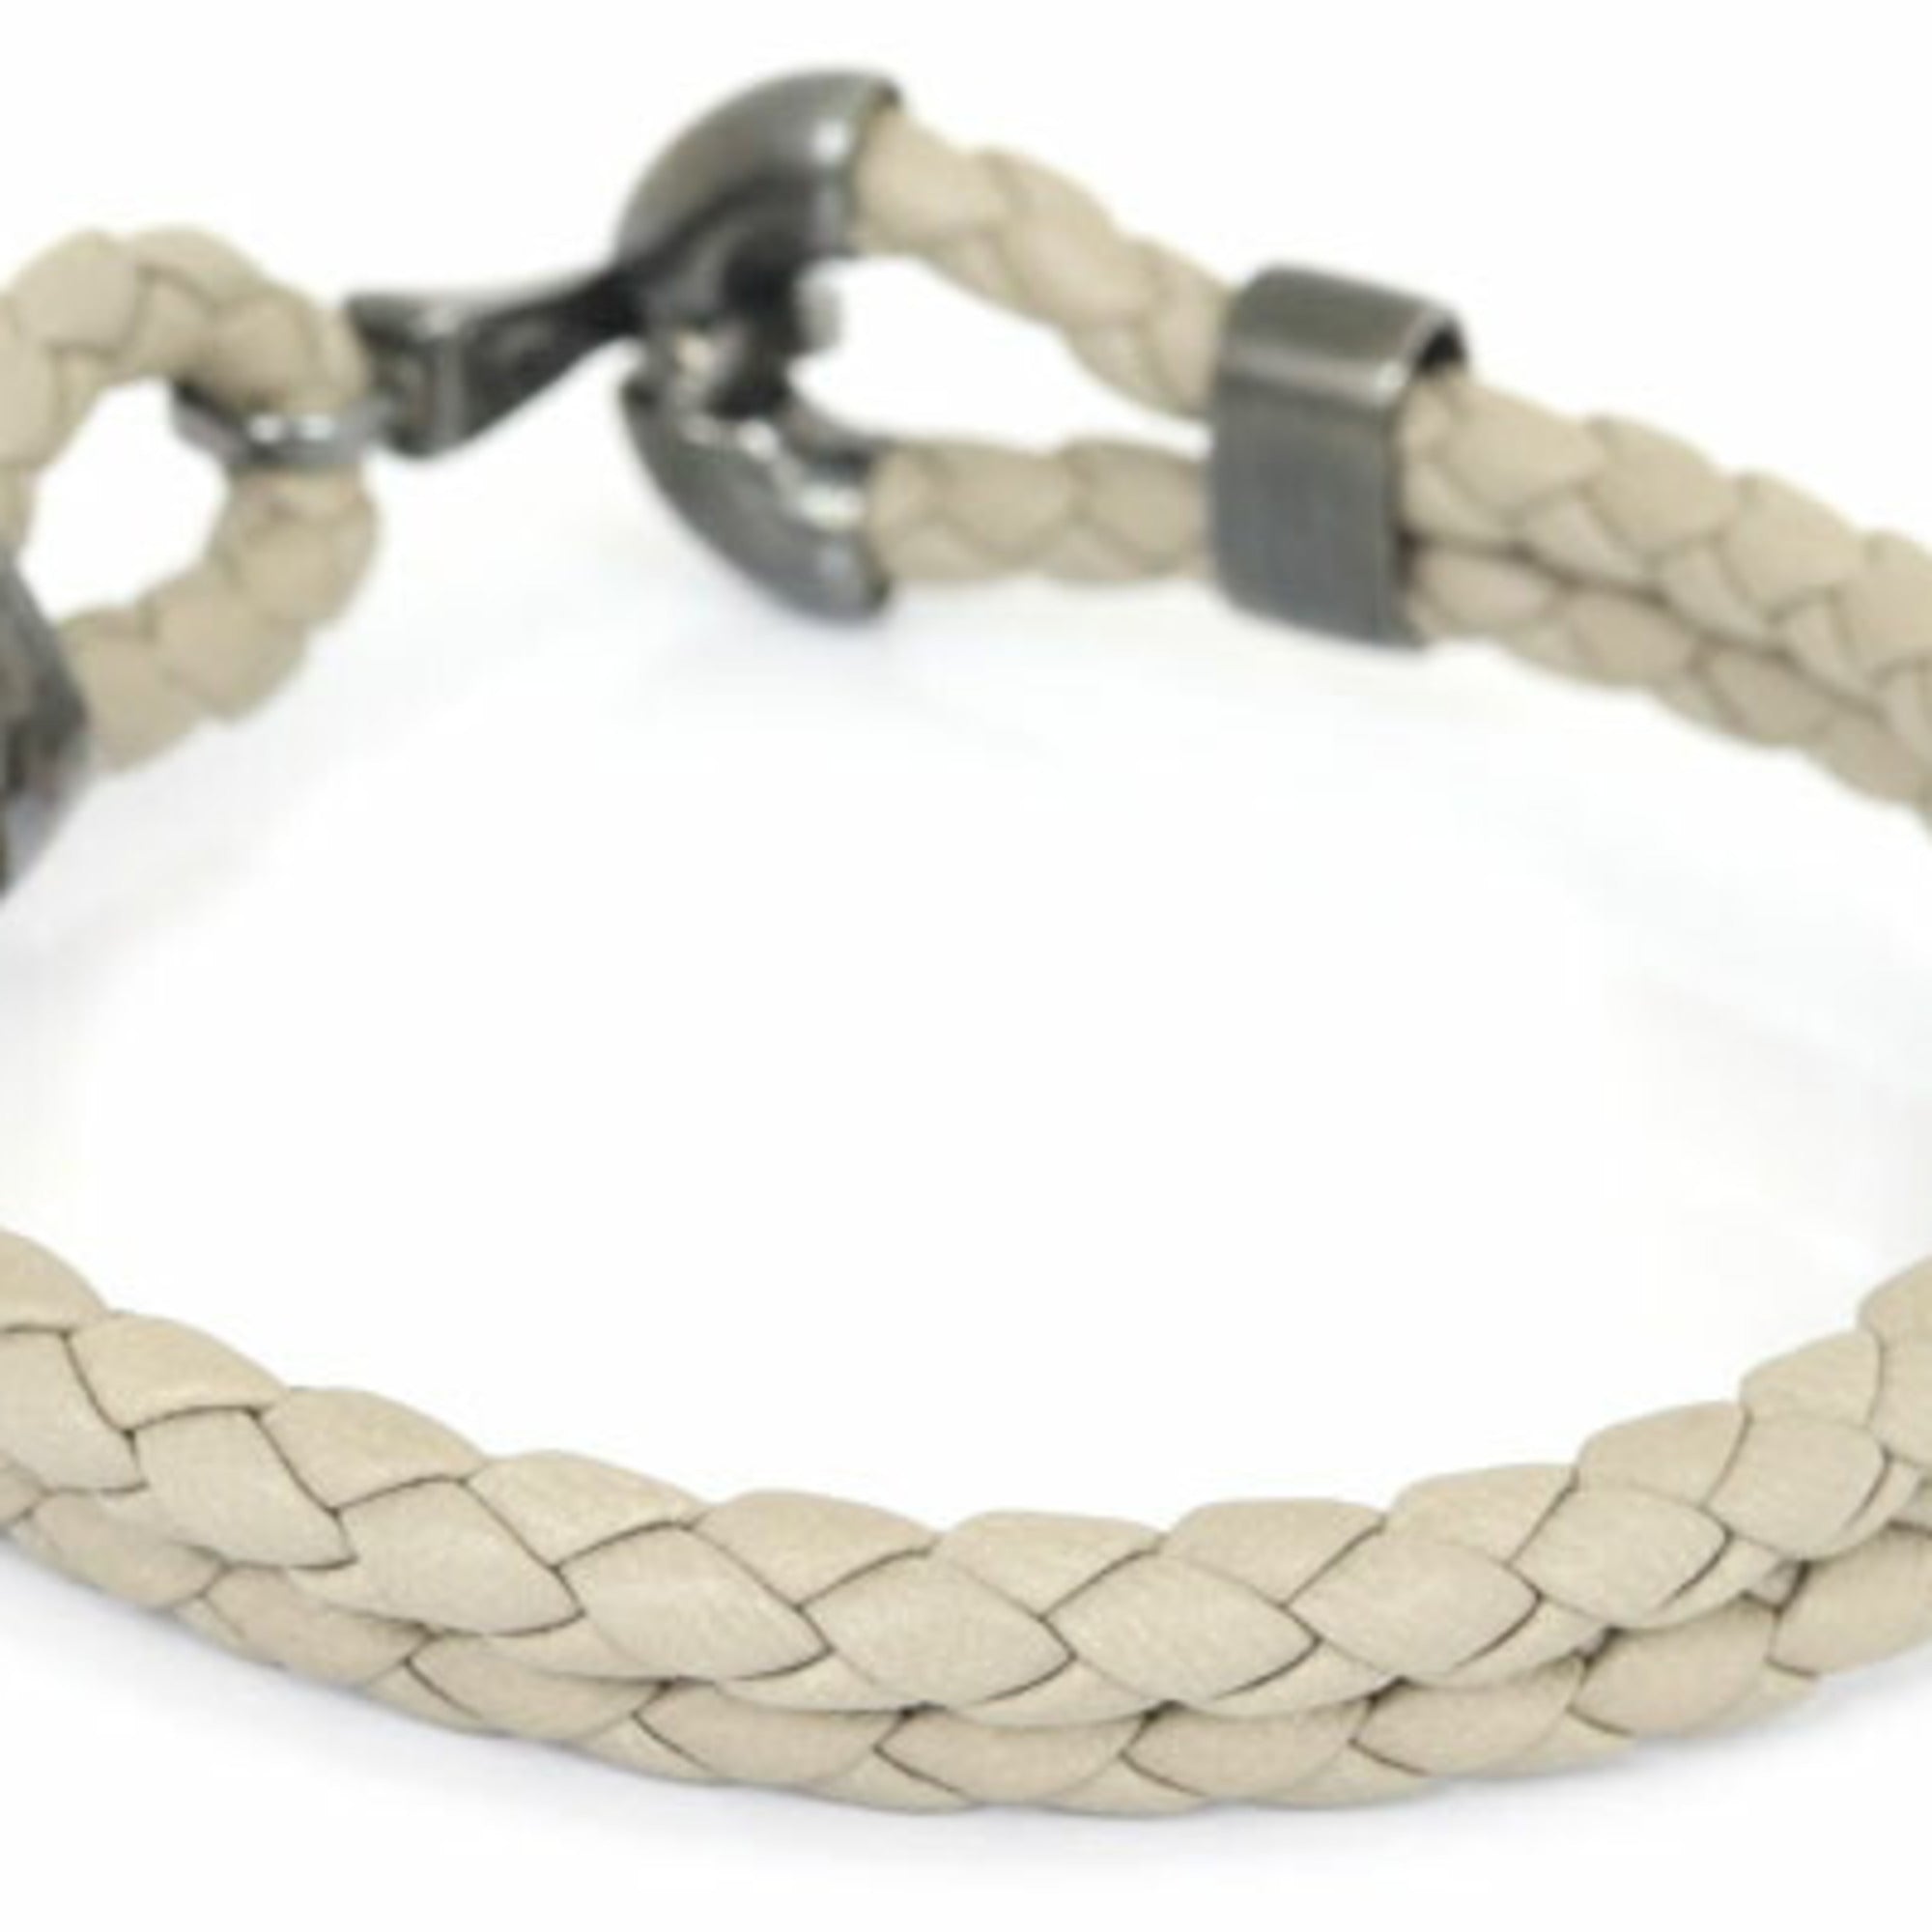 Bottega Veneta Tourmaline Intrecciato Nappa Bracelet | Bracelets for men,  Mens fashion swag, Leather bracelet